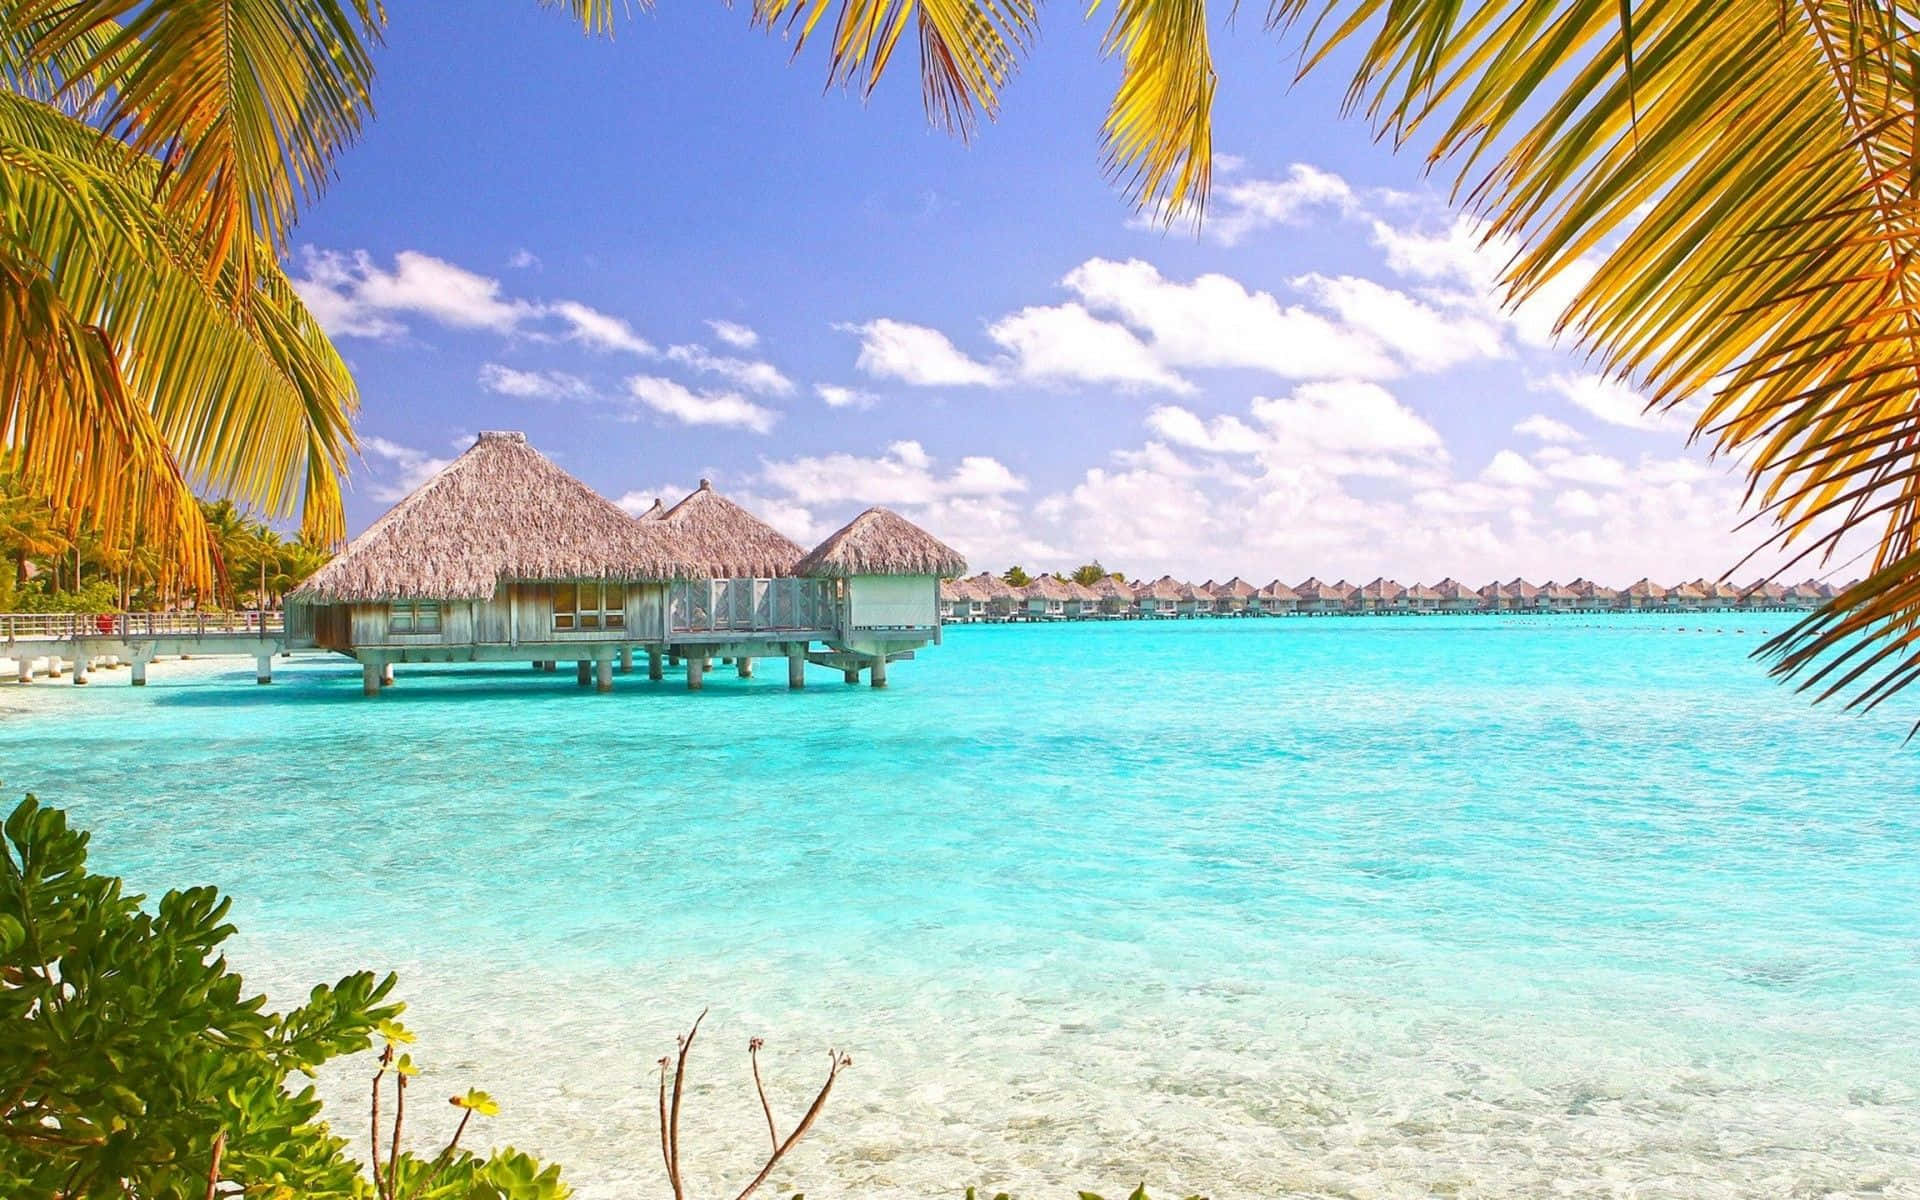 Enjoy the breathtaking view of a tropical beach.